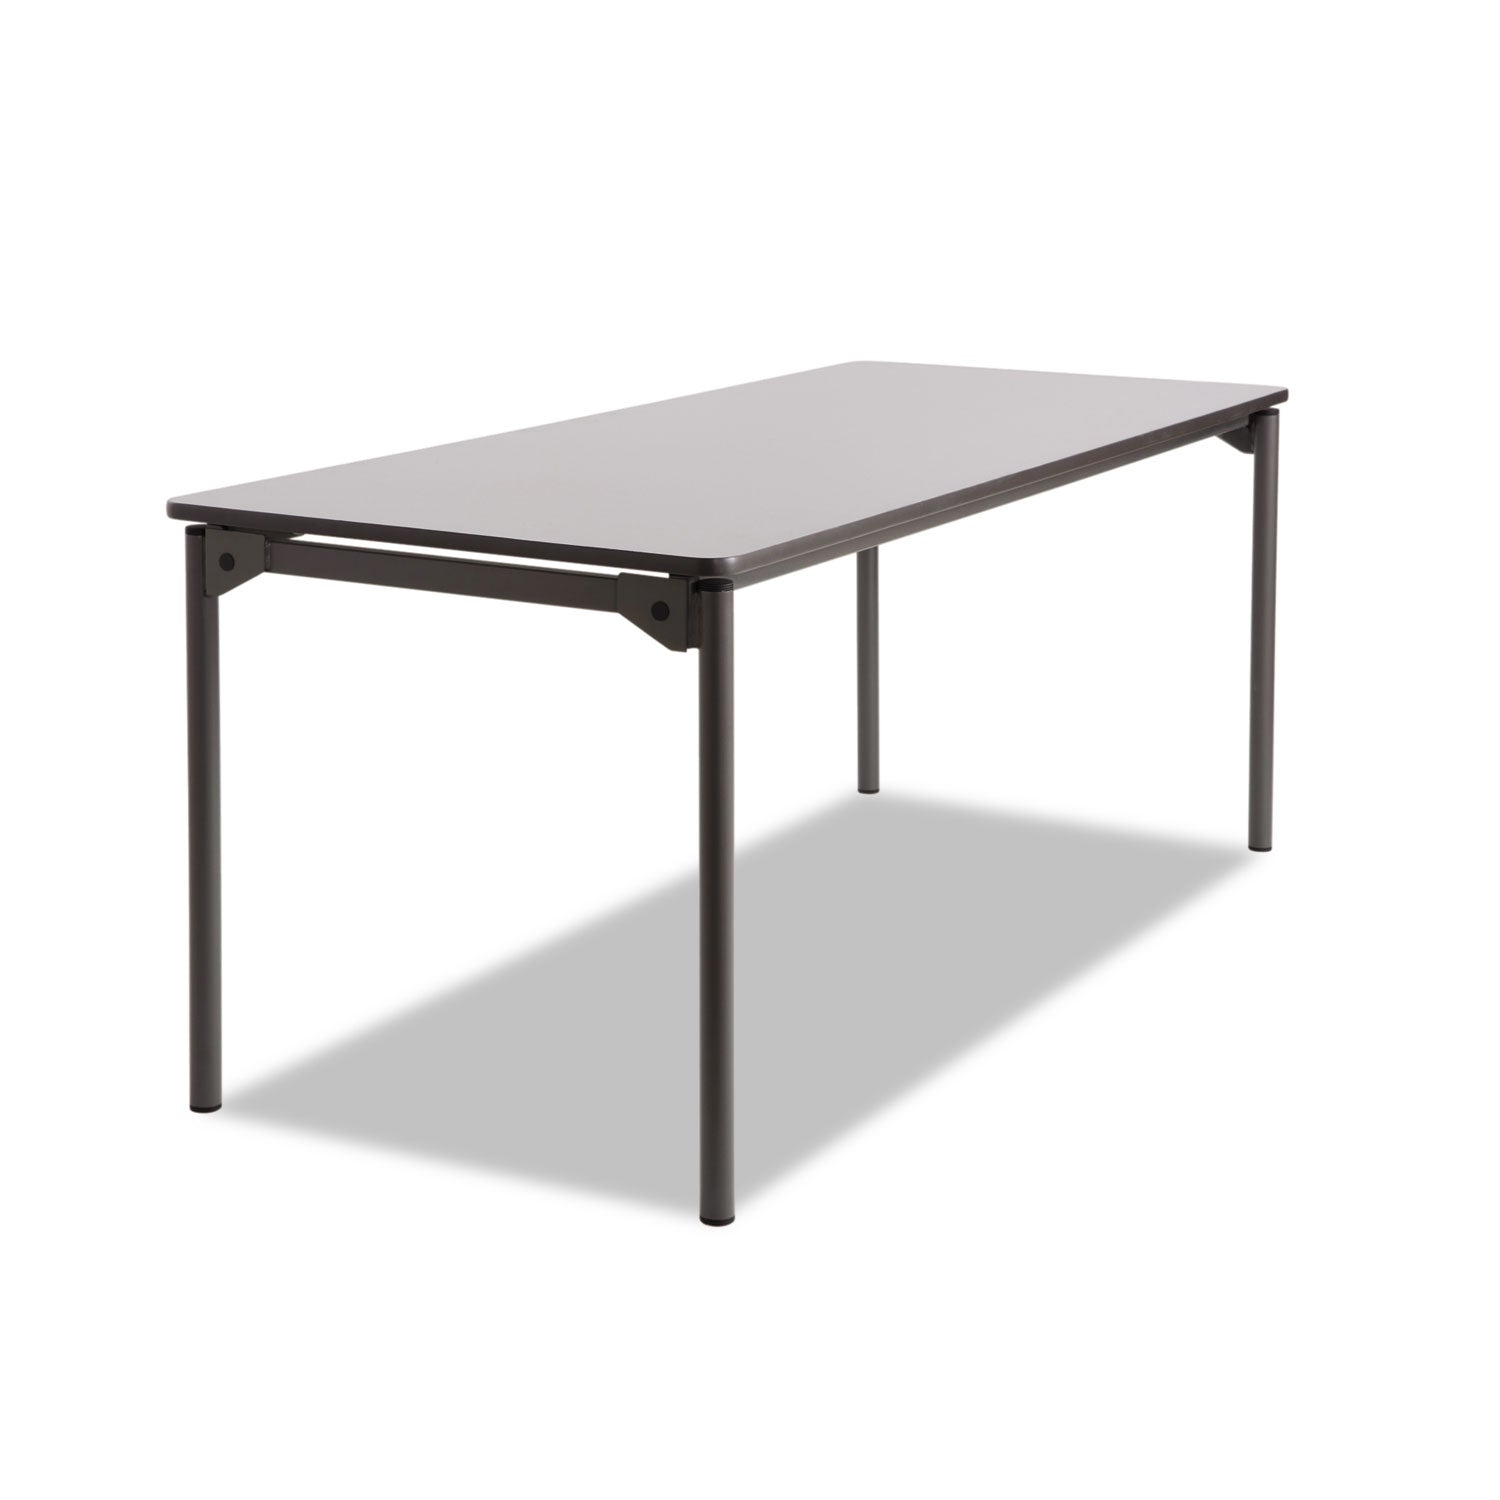 Maxx Legroom Wood Folding Table, Rectangular, 72" x 30" x 29.5", Gray/Charcoal - 